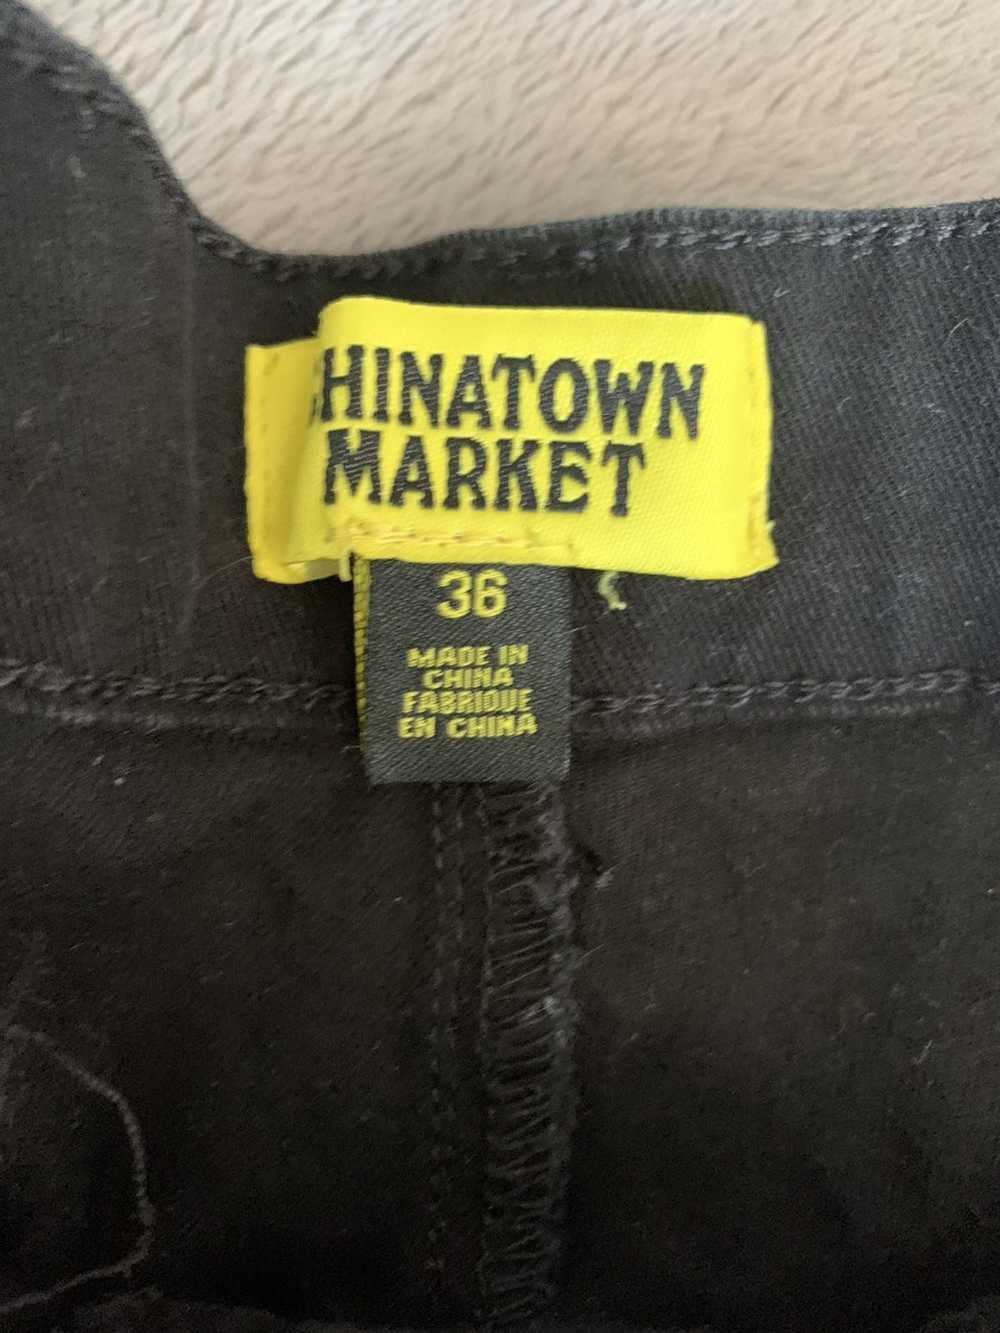 Market Chinatown Market Multi Language Pants - image 2